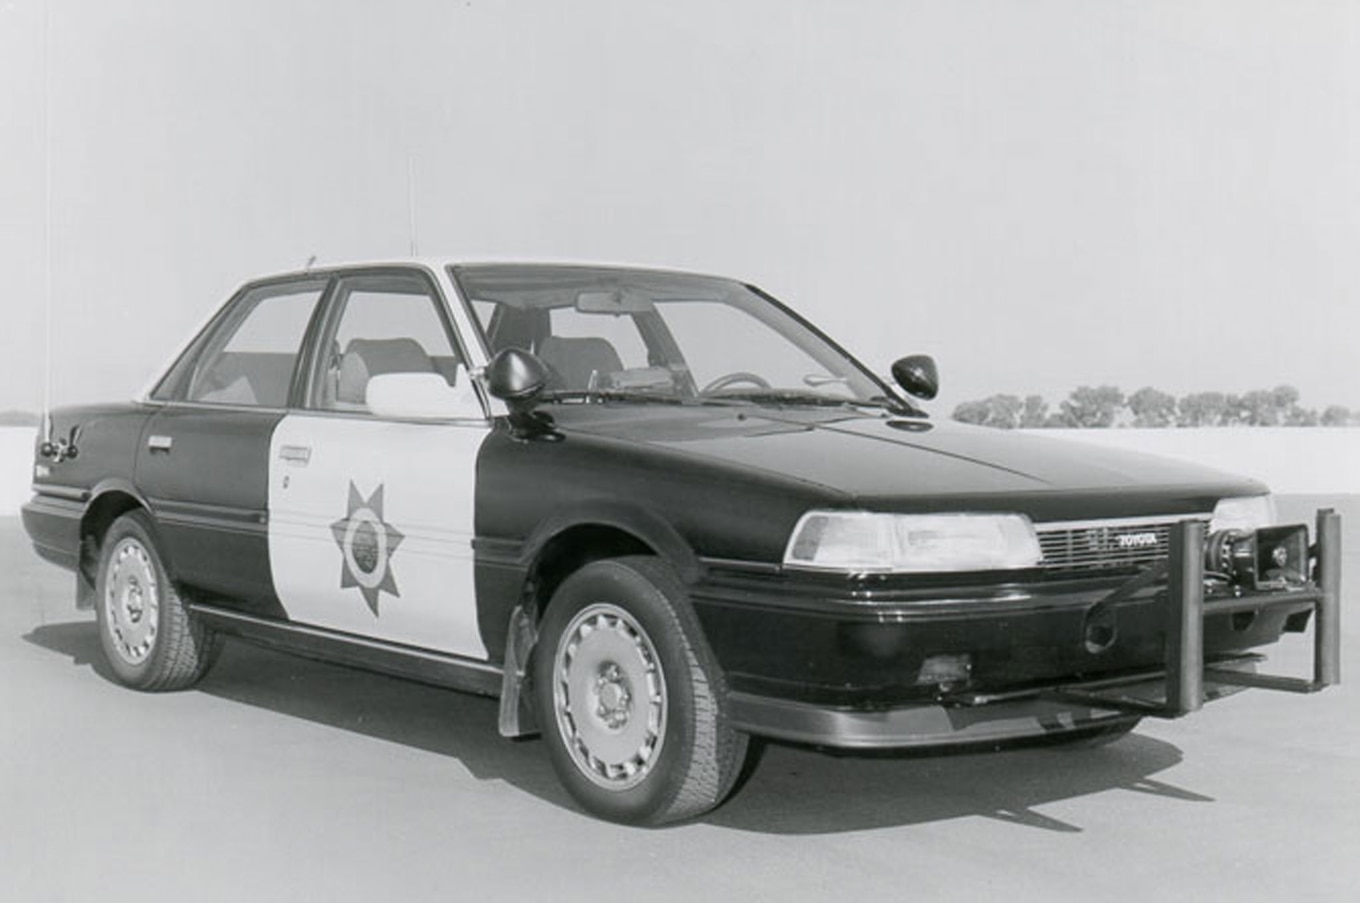 1990-Toyota-Camry-police-car.jpg